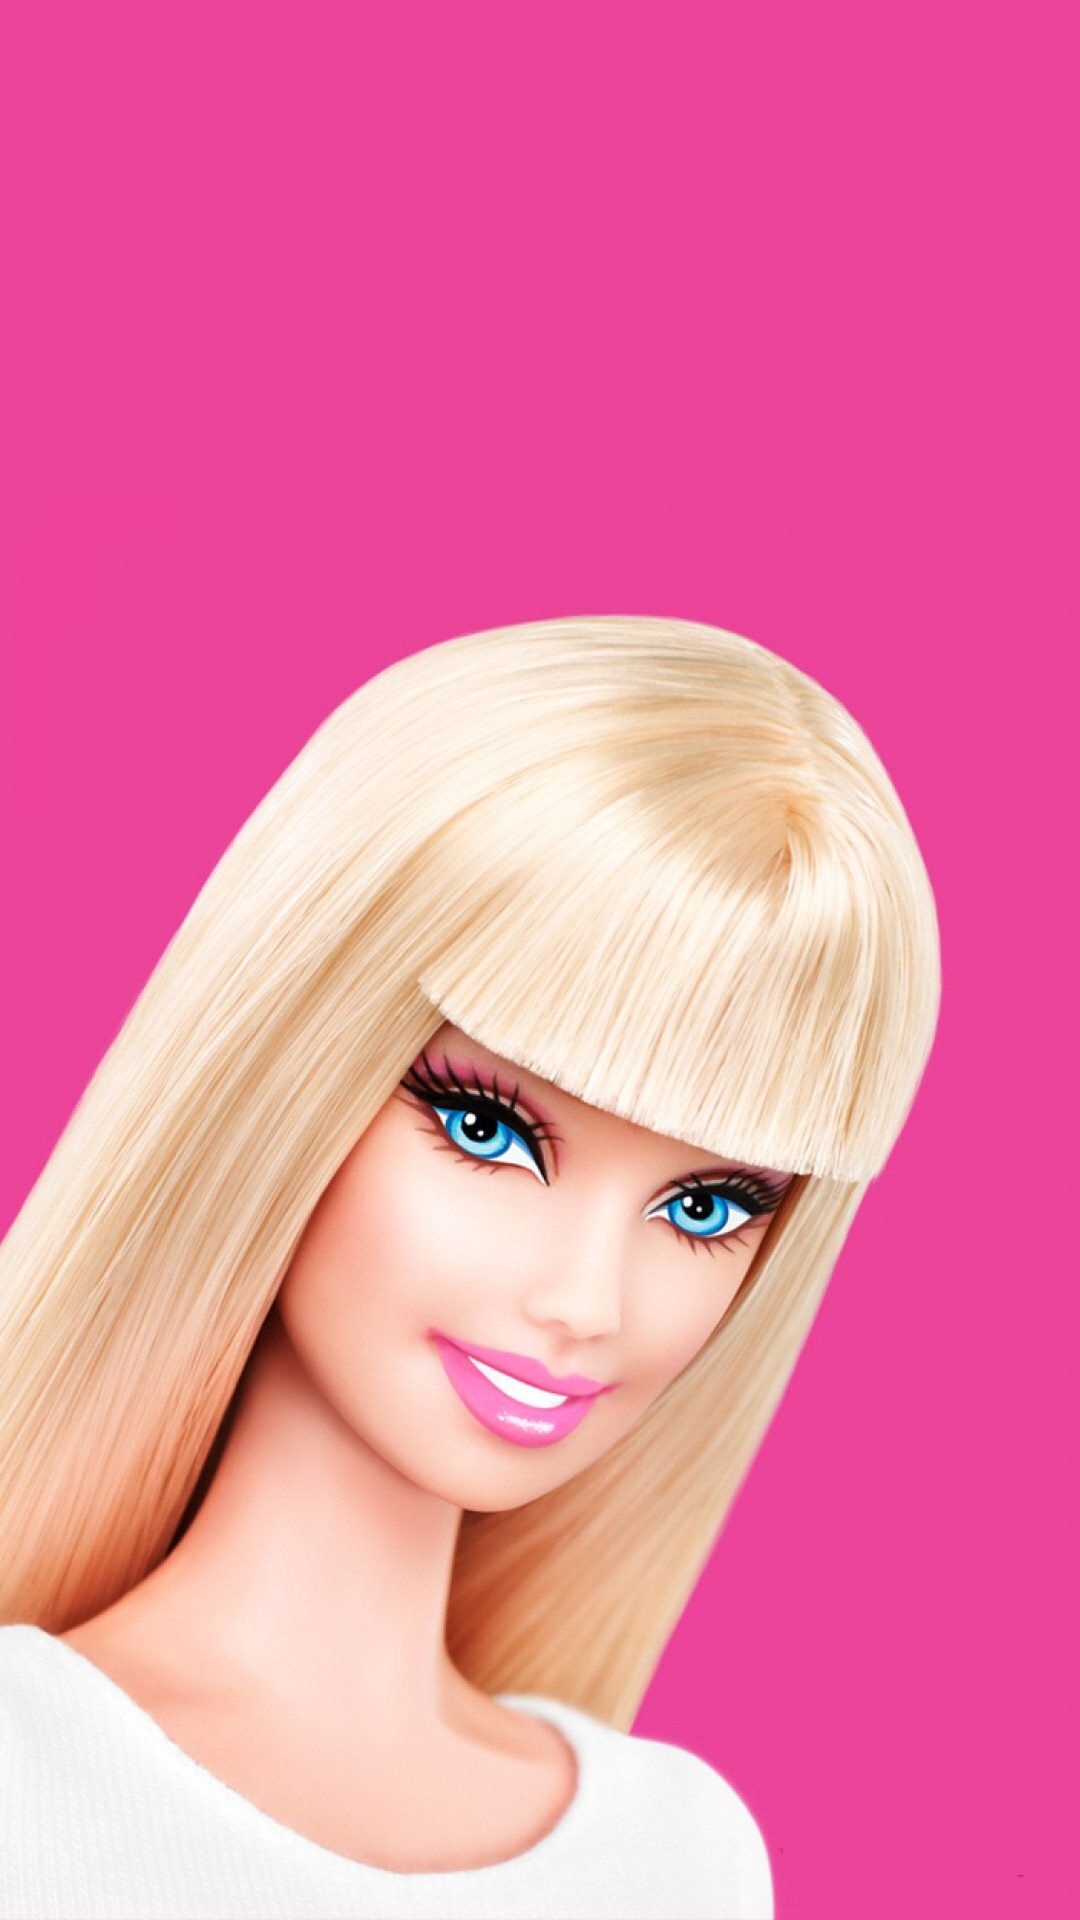 Barbie wallpaper sup2, Unique design, Barbie-themed artwork, 1080x1920 Full HD Handy